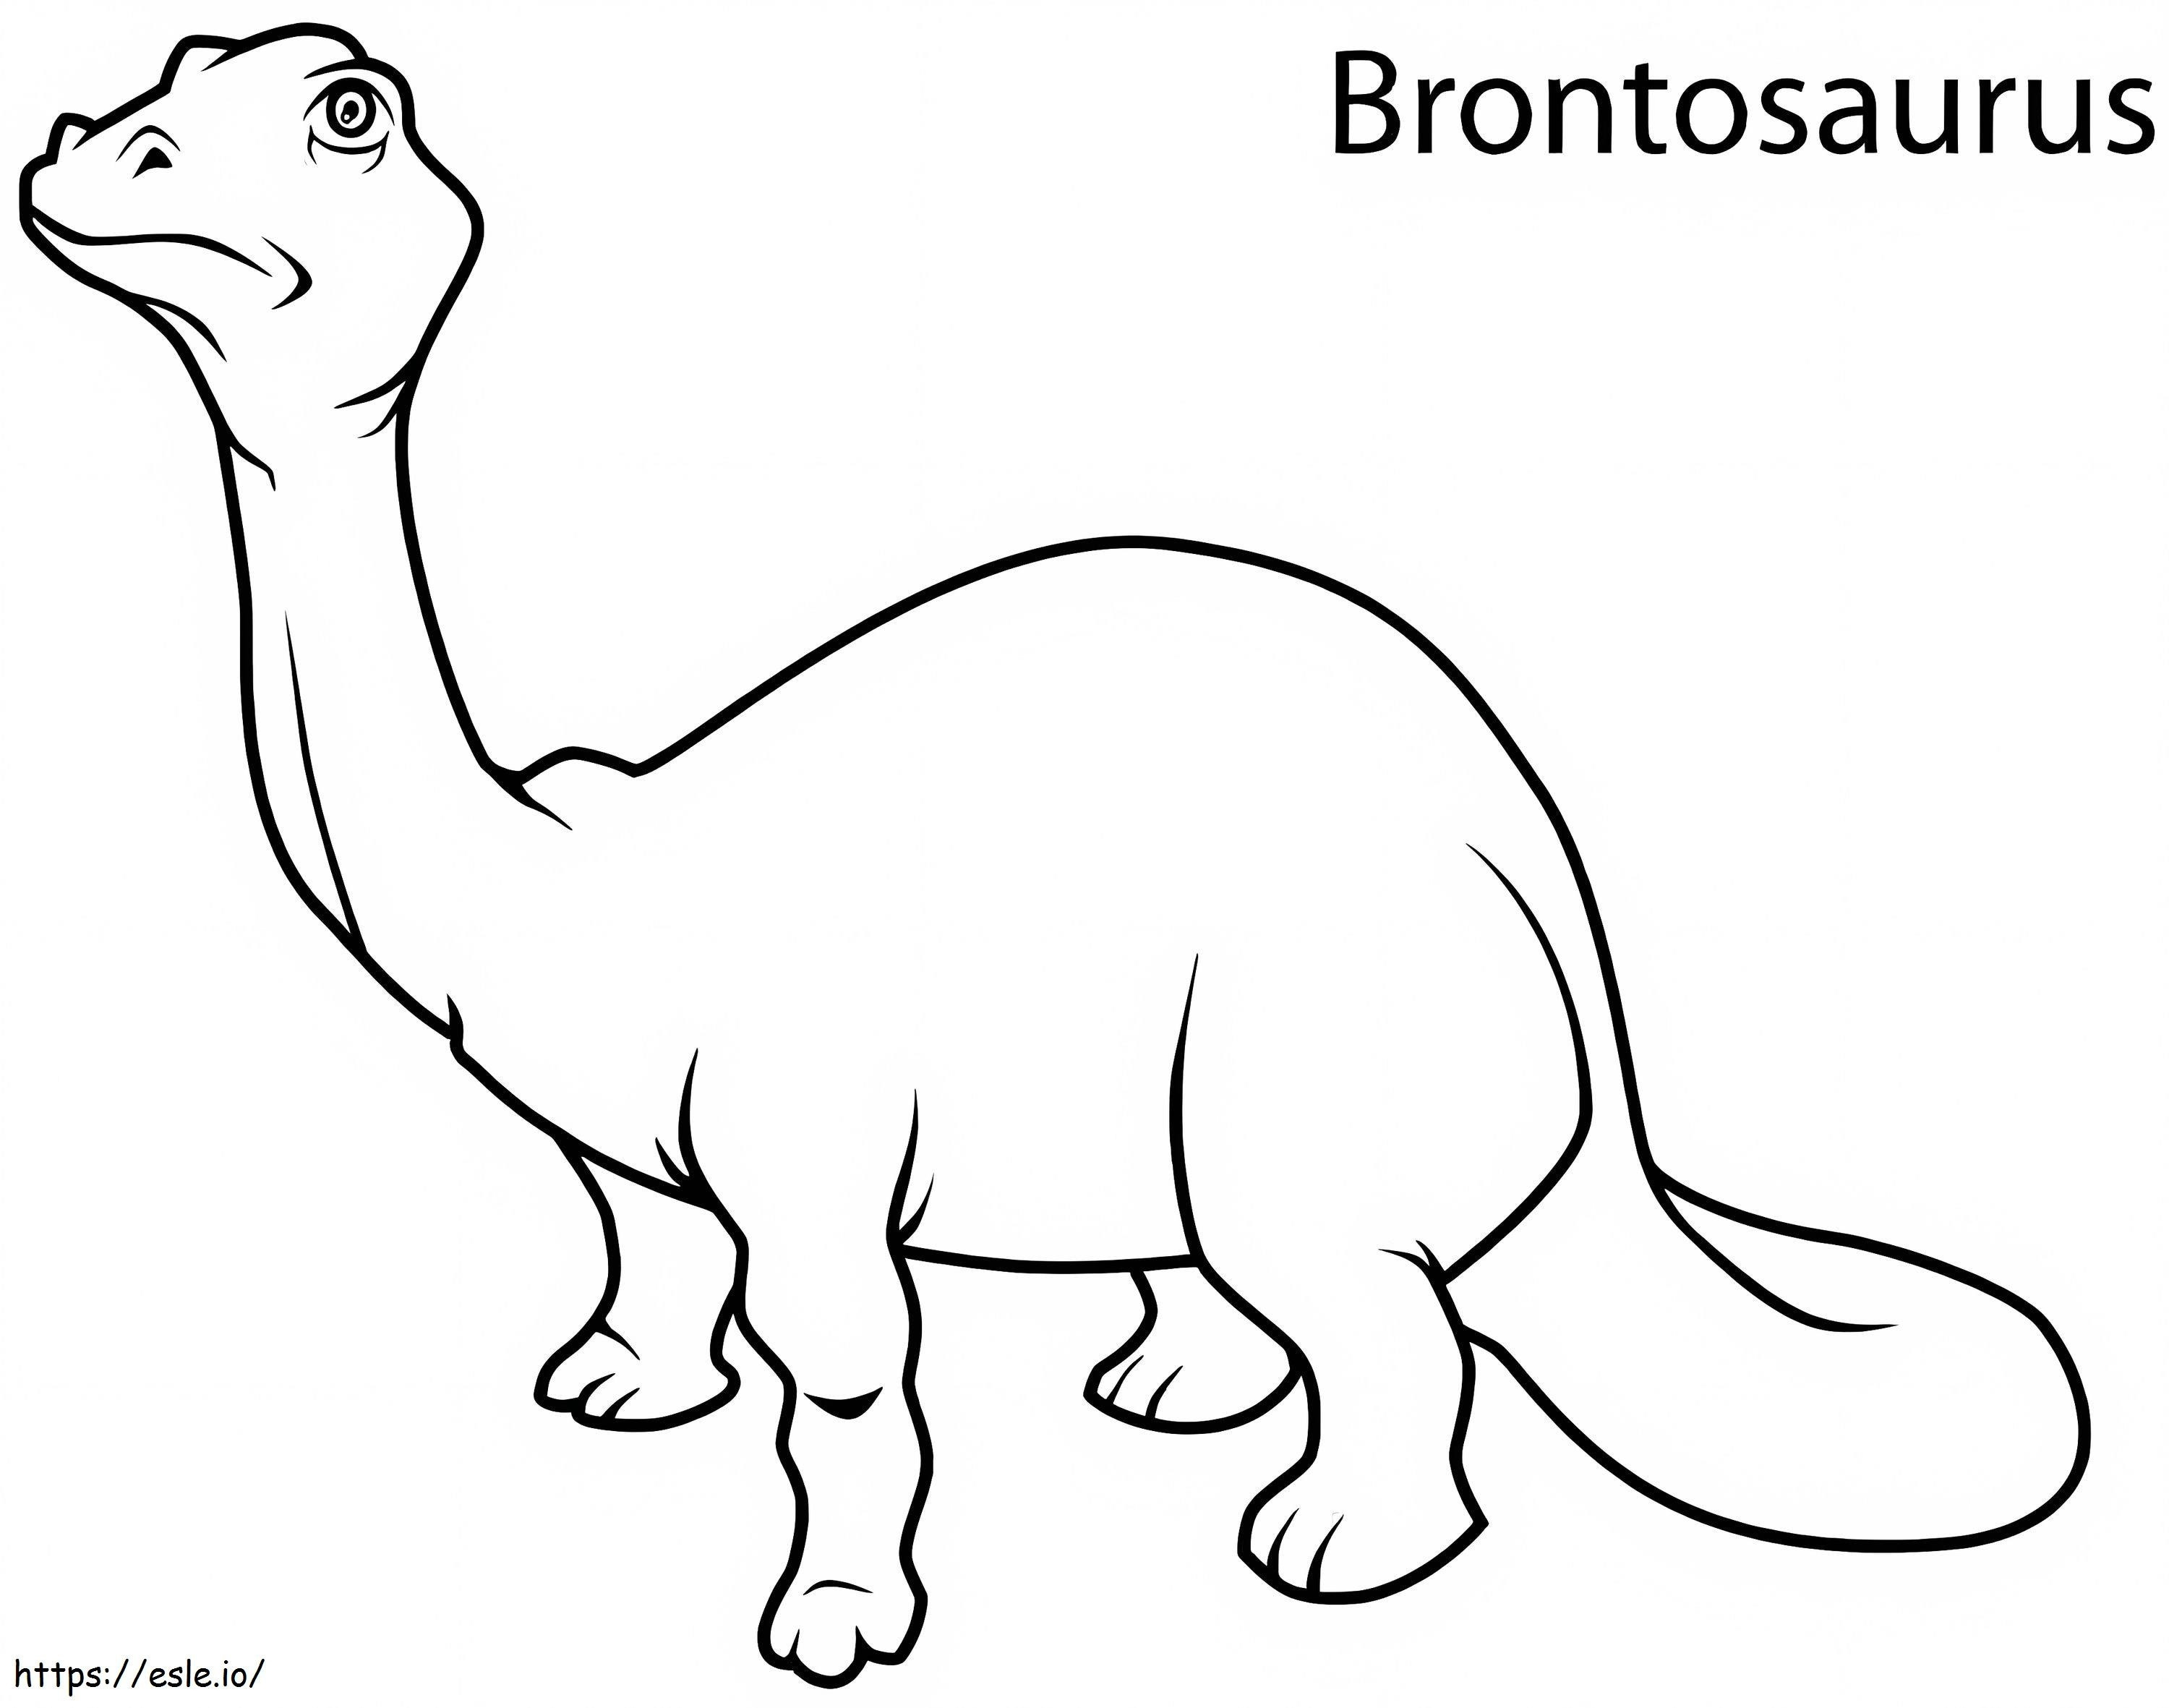 Grundlegender Brontosaurus ausmalbilder